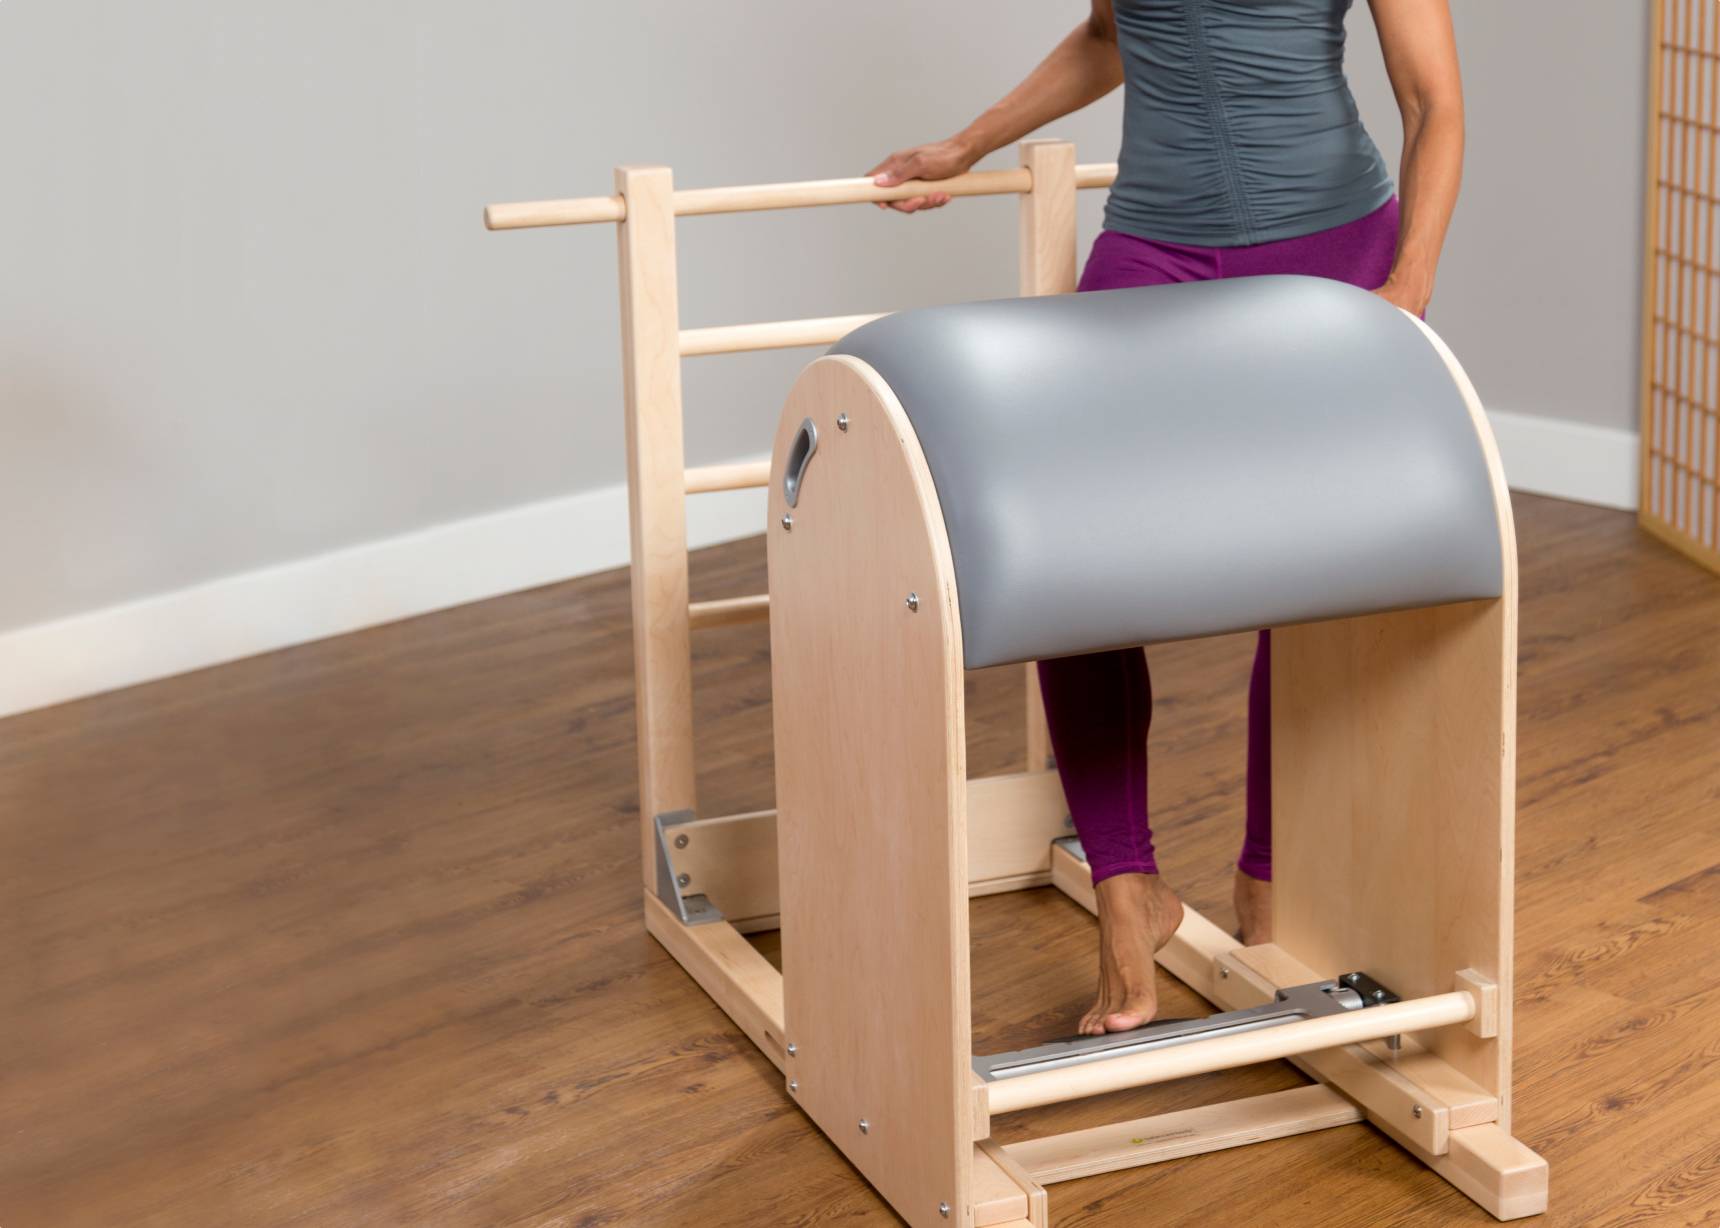 A profile view of a Pilates ladder barrel, highlighting its ergonomic design.